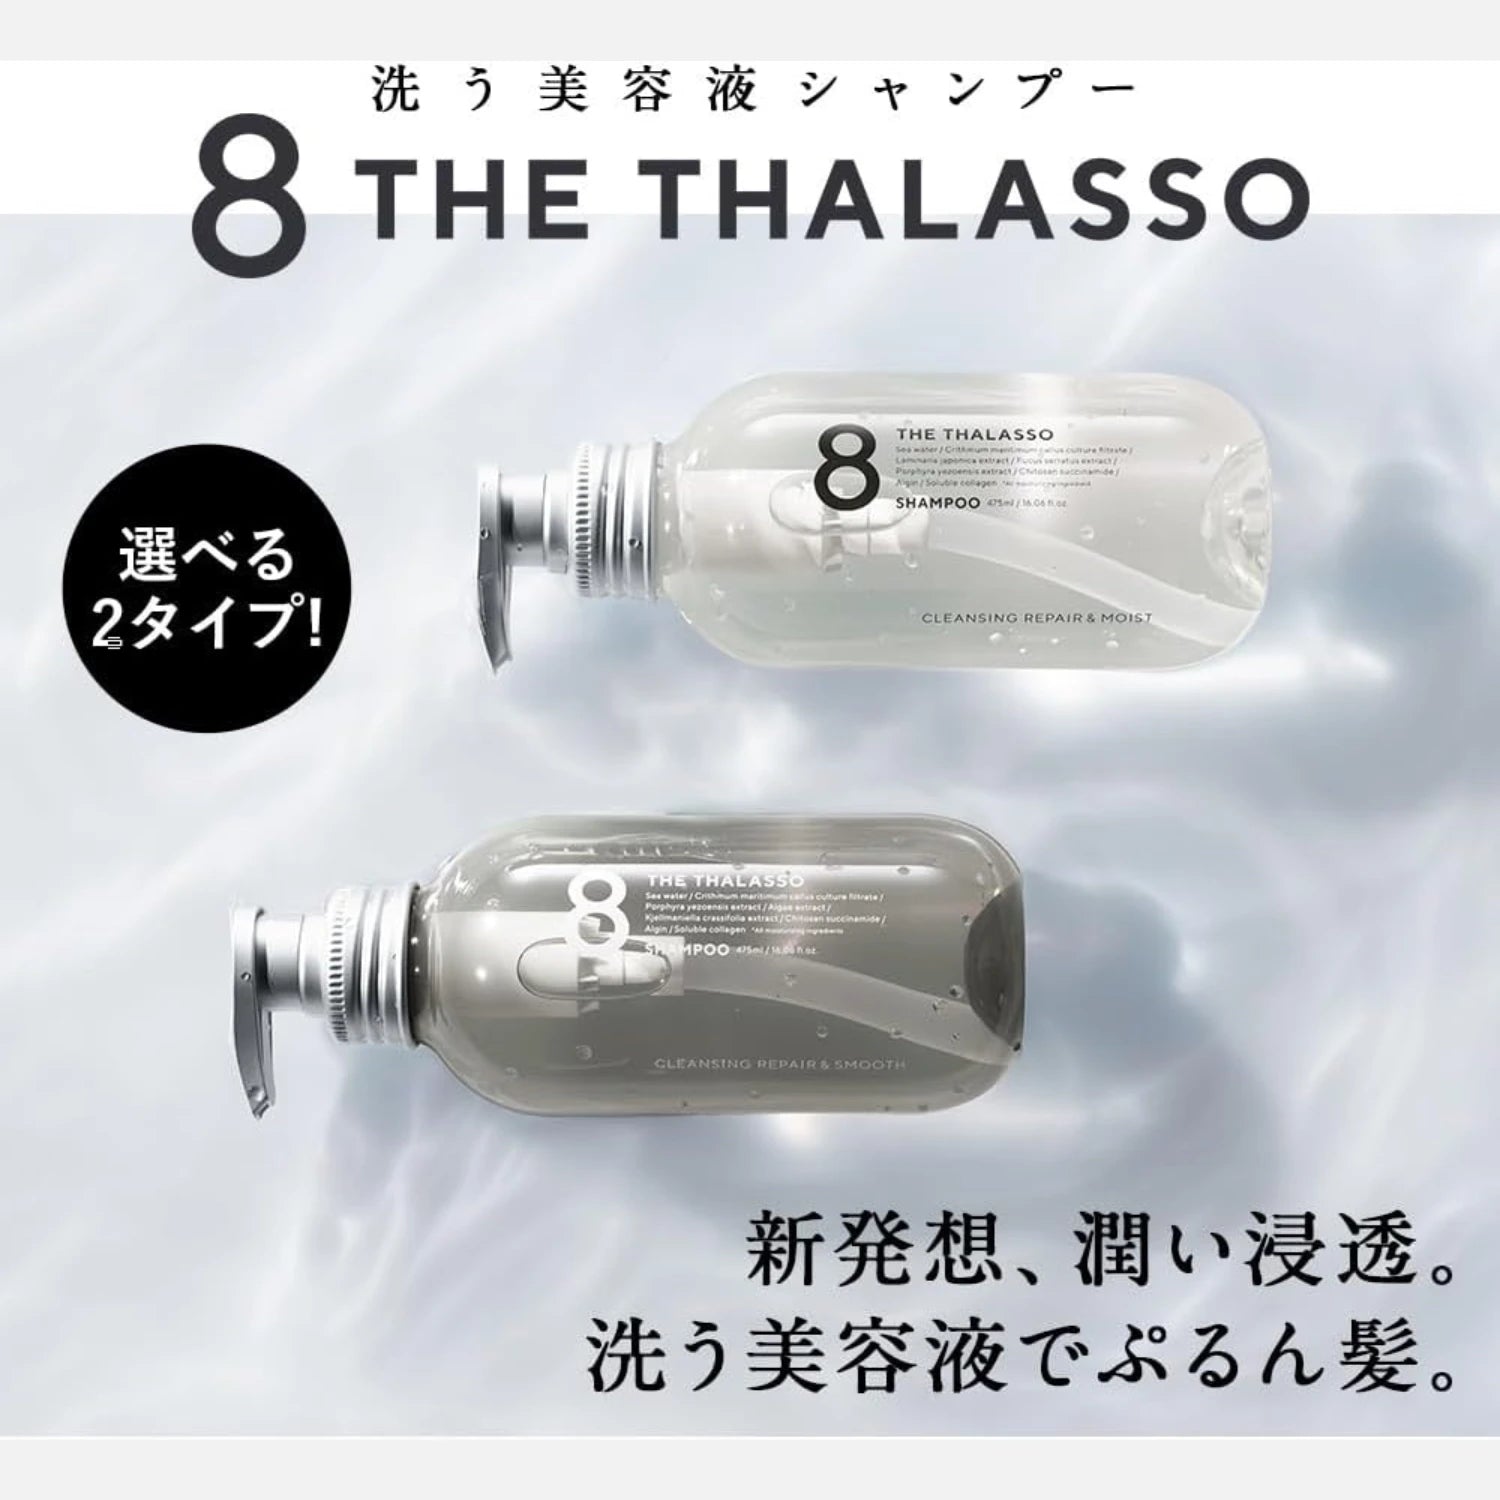 8 The Thalasso Smooth Repair & Aqua Serum Shampoo and Treatment Set (475ml Each) - Buy Me Japan